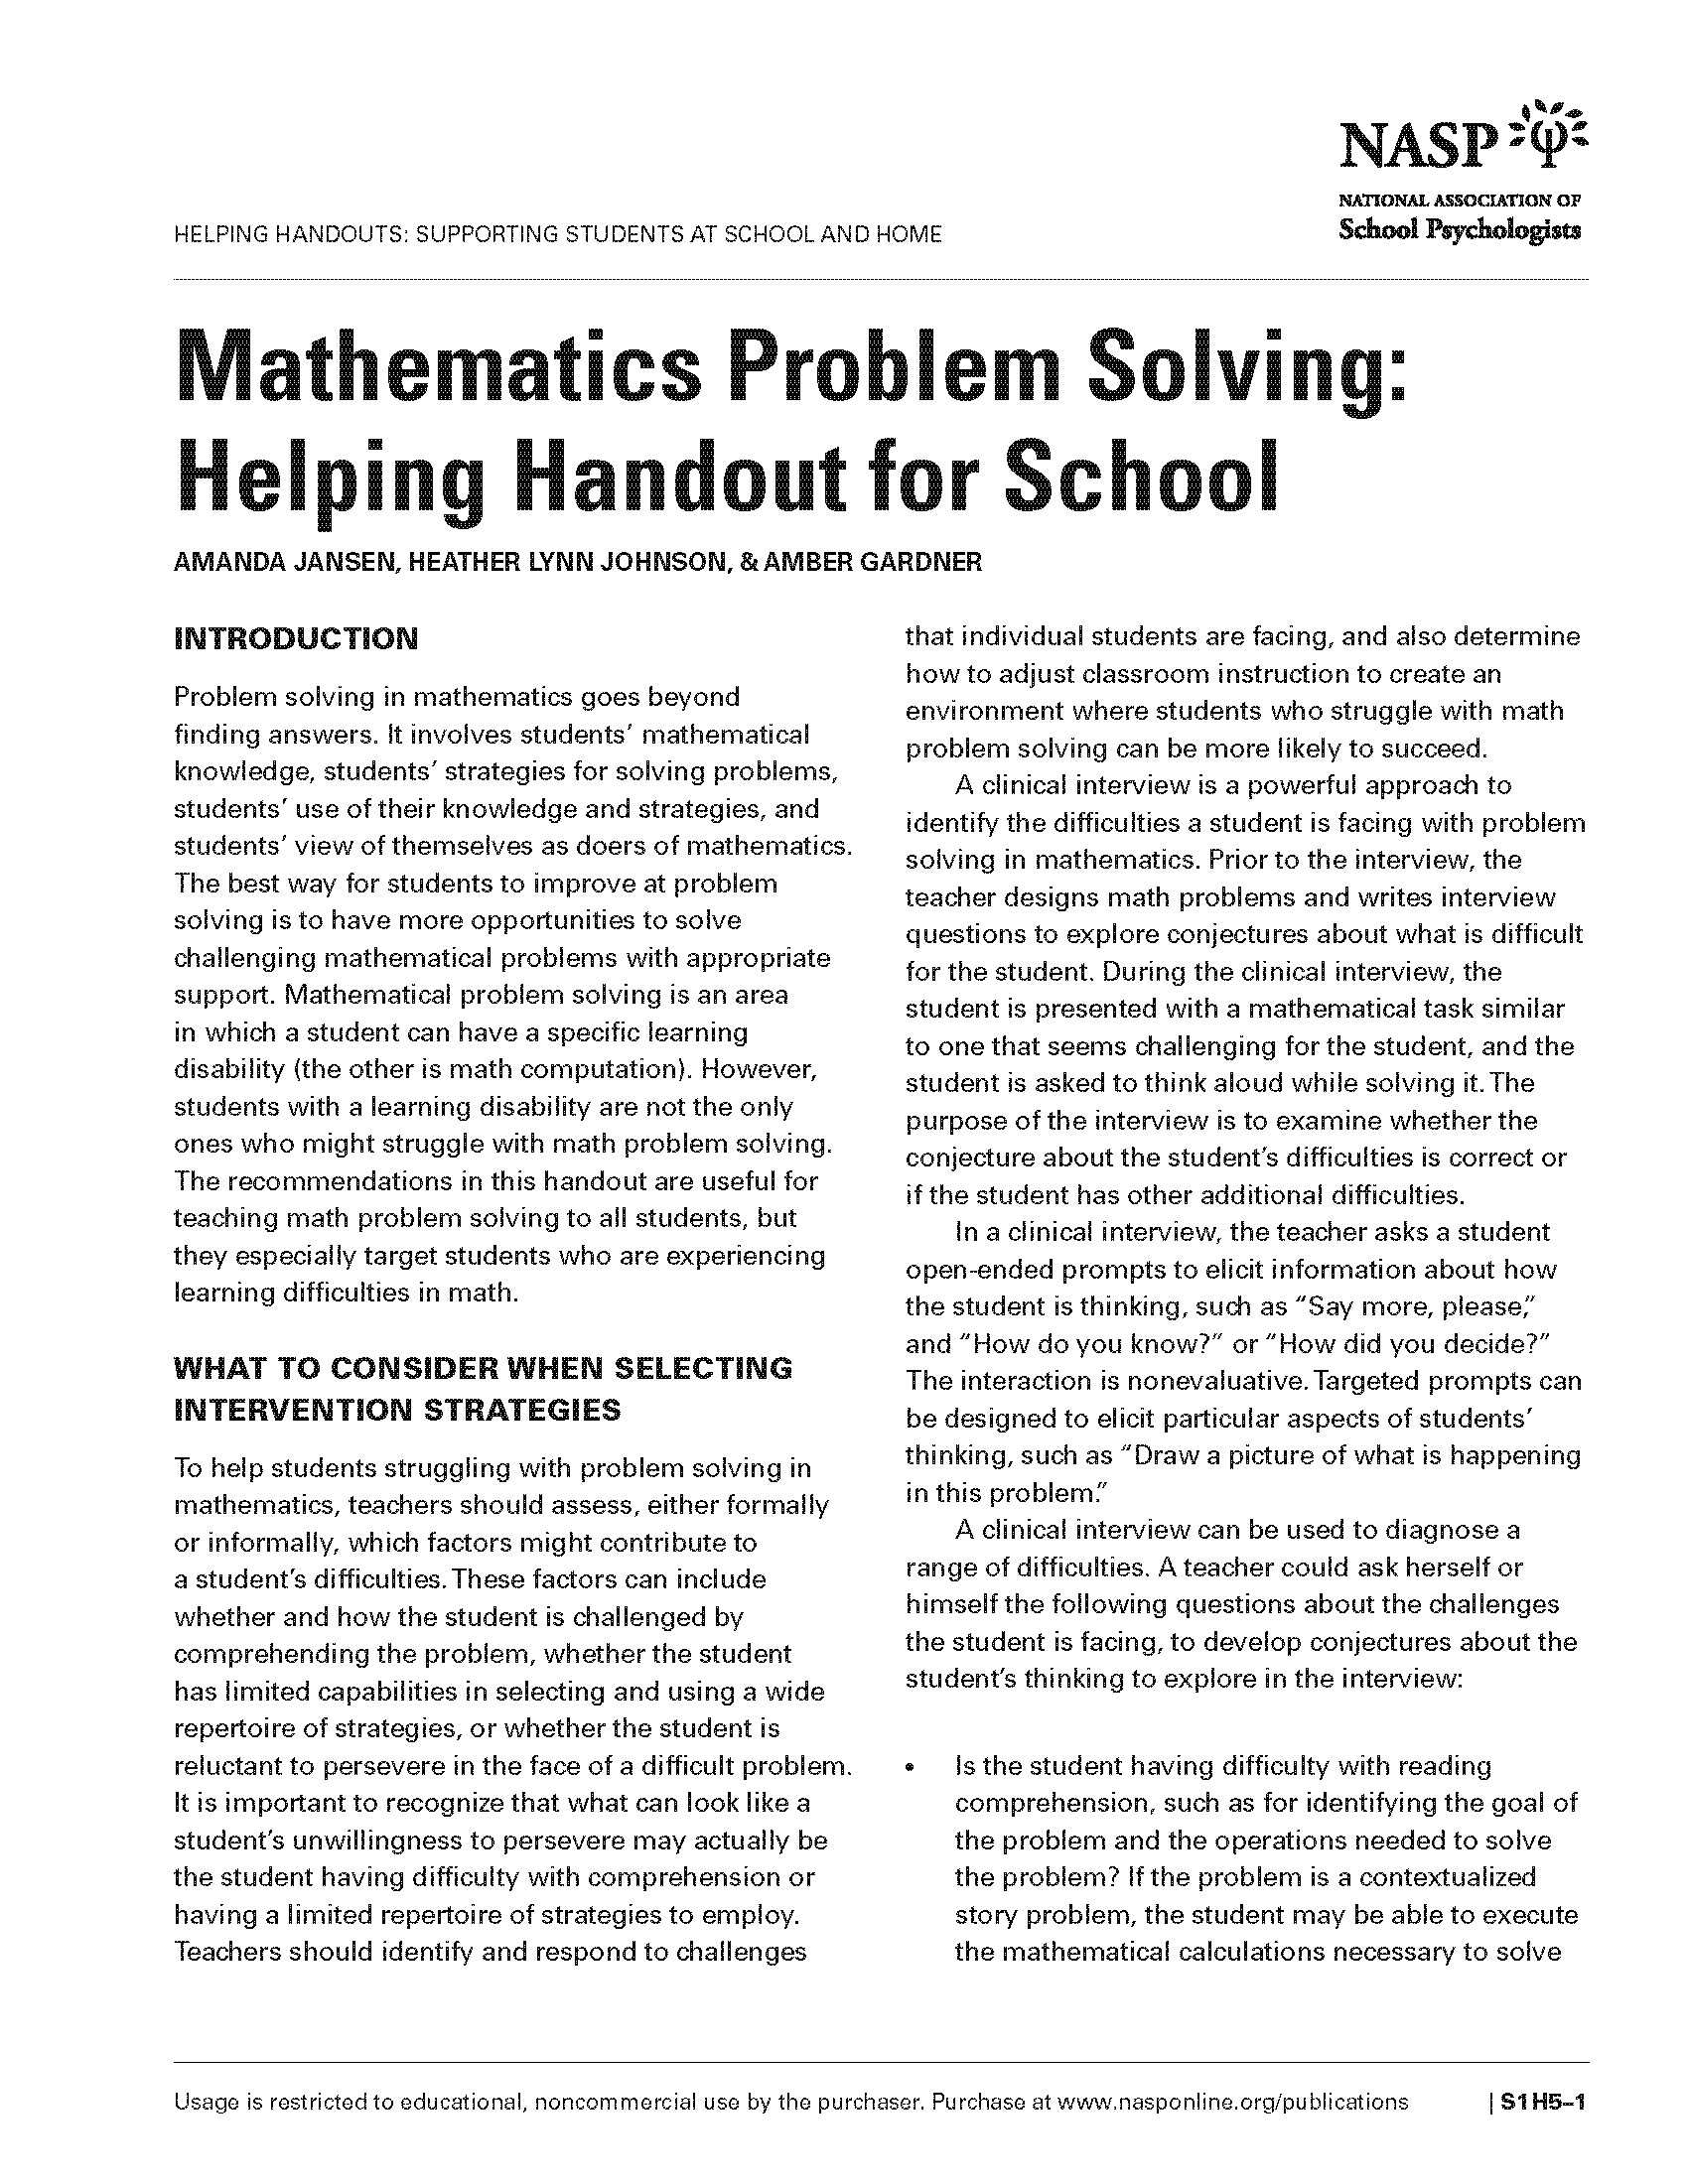 Mathematics Problem Solving: Helping Handout for School